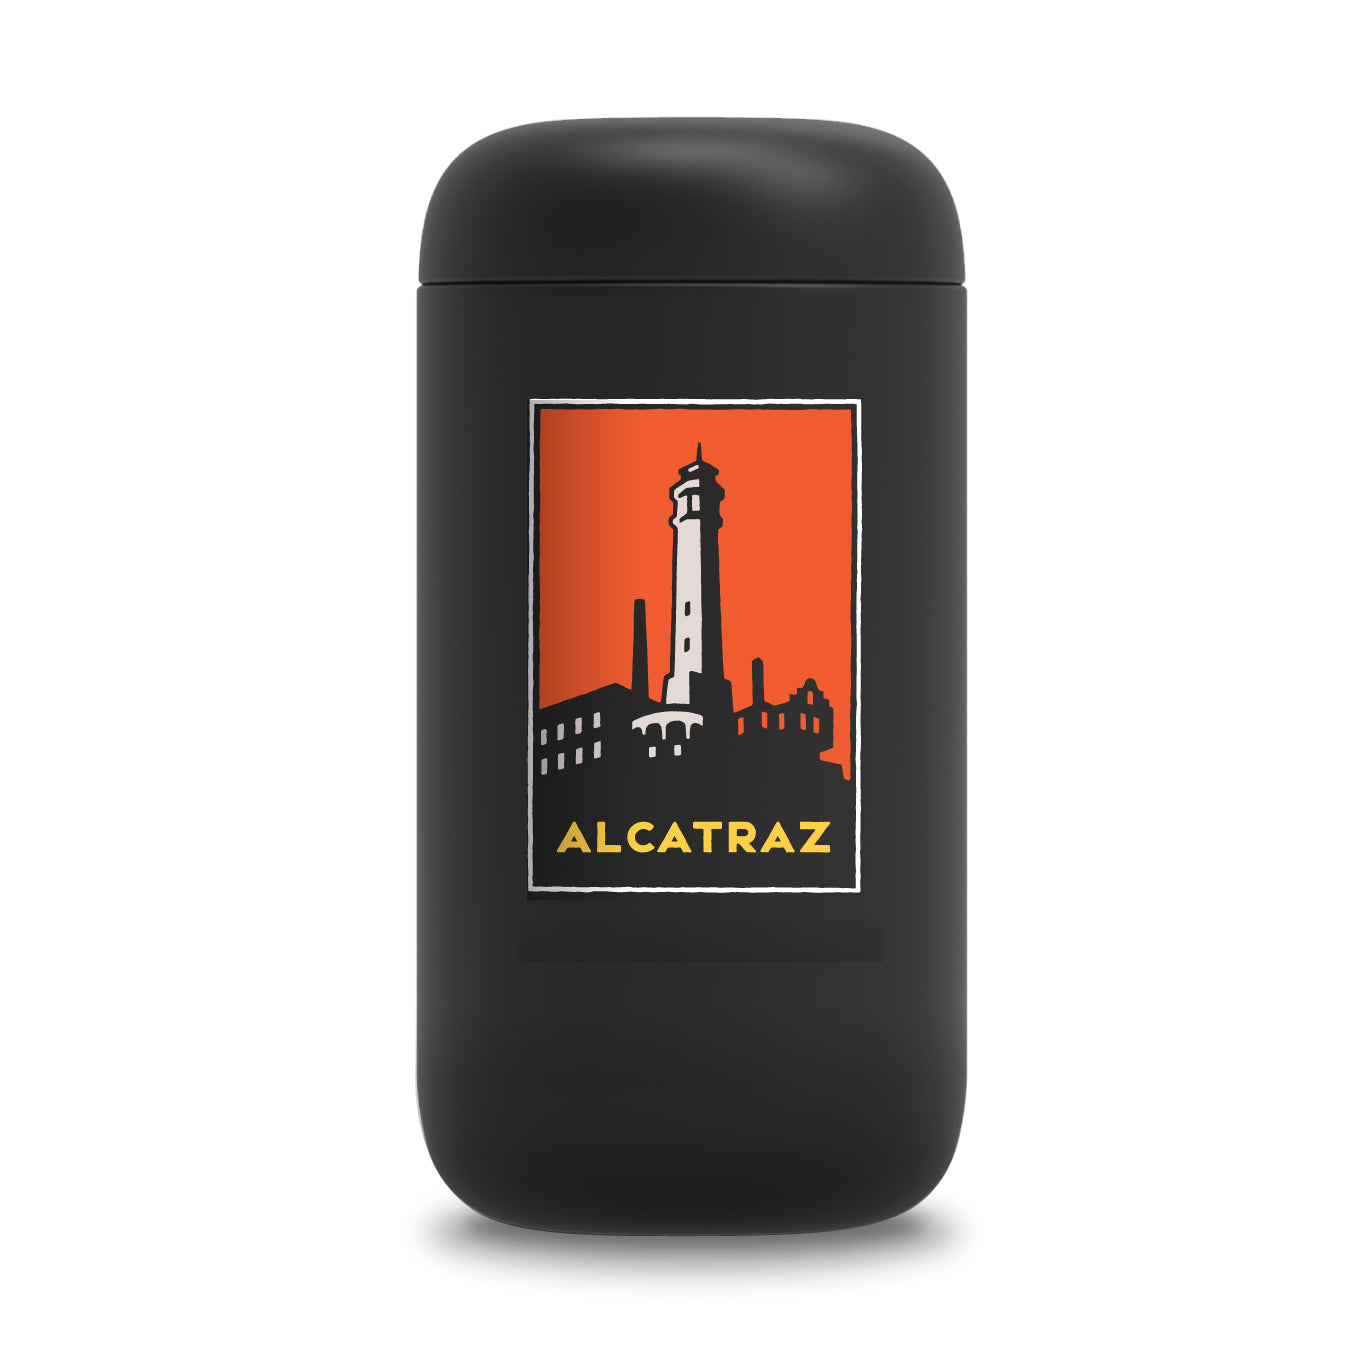 12-ounce Alcatraz travel mug made in partnership with Fellow, multicolor illustration by Michael Schwab on black mug